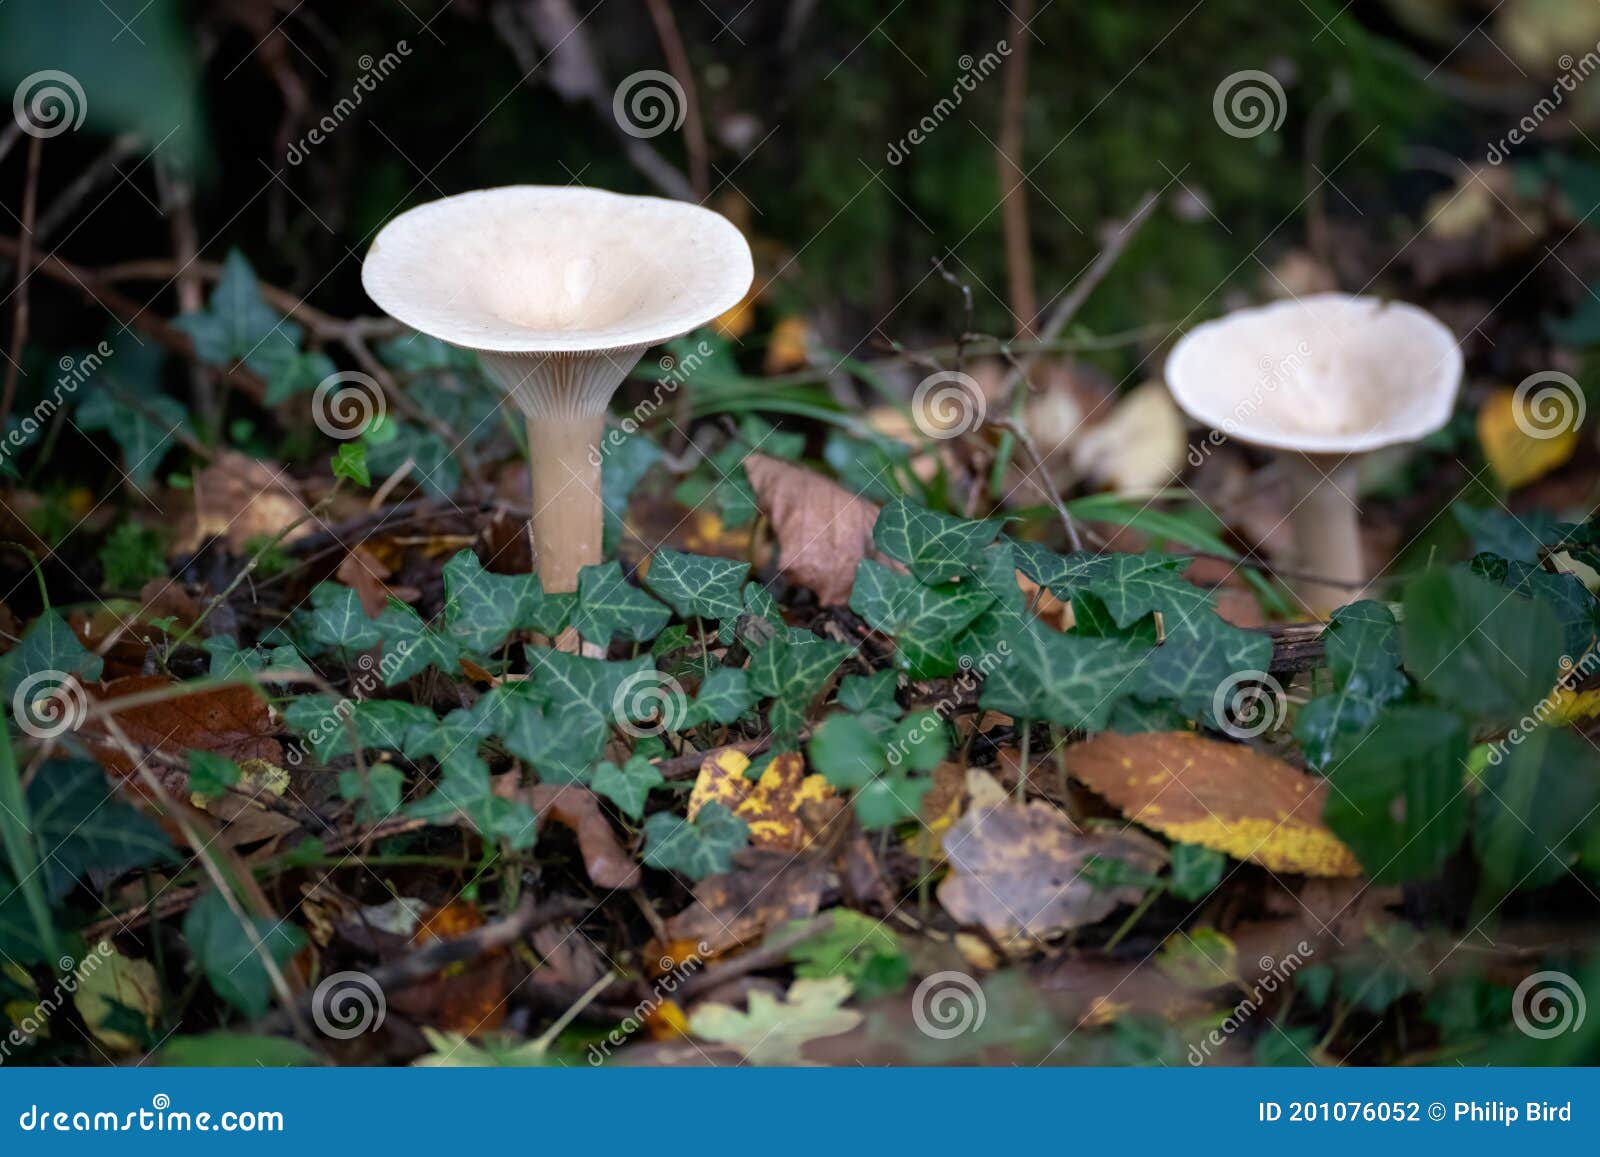 trooping funnel long stemmed mushroom